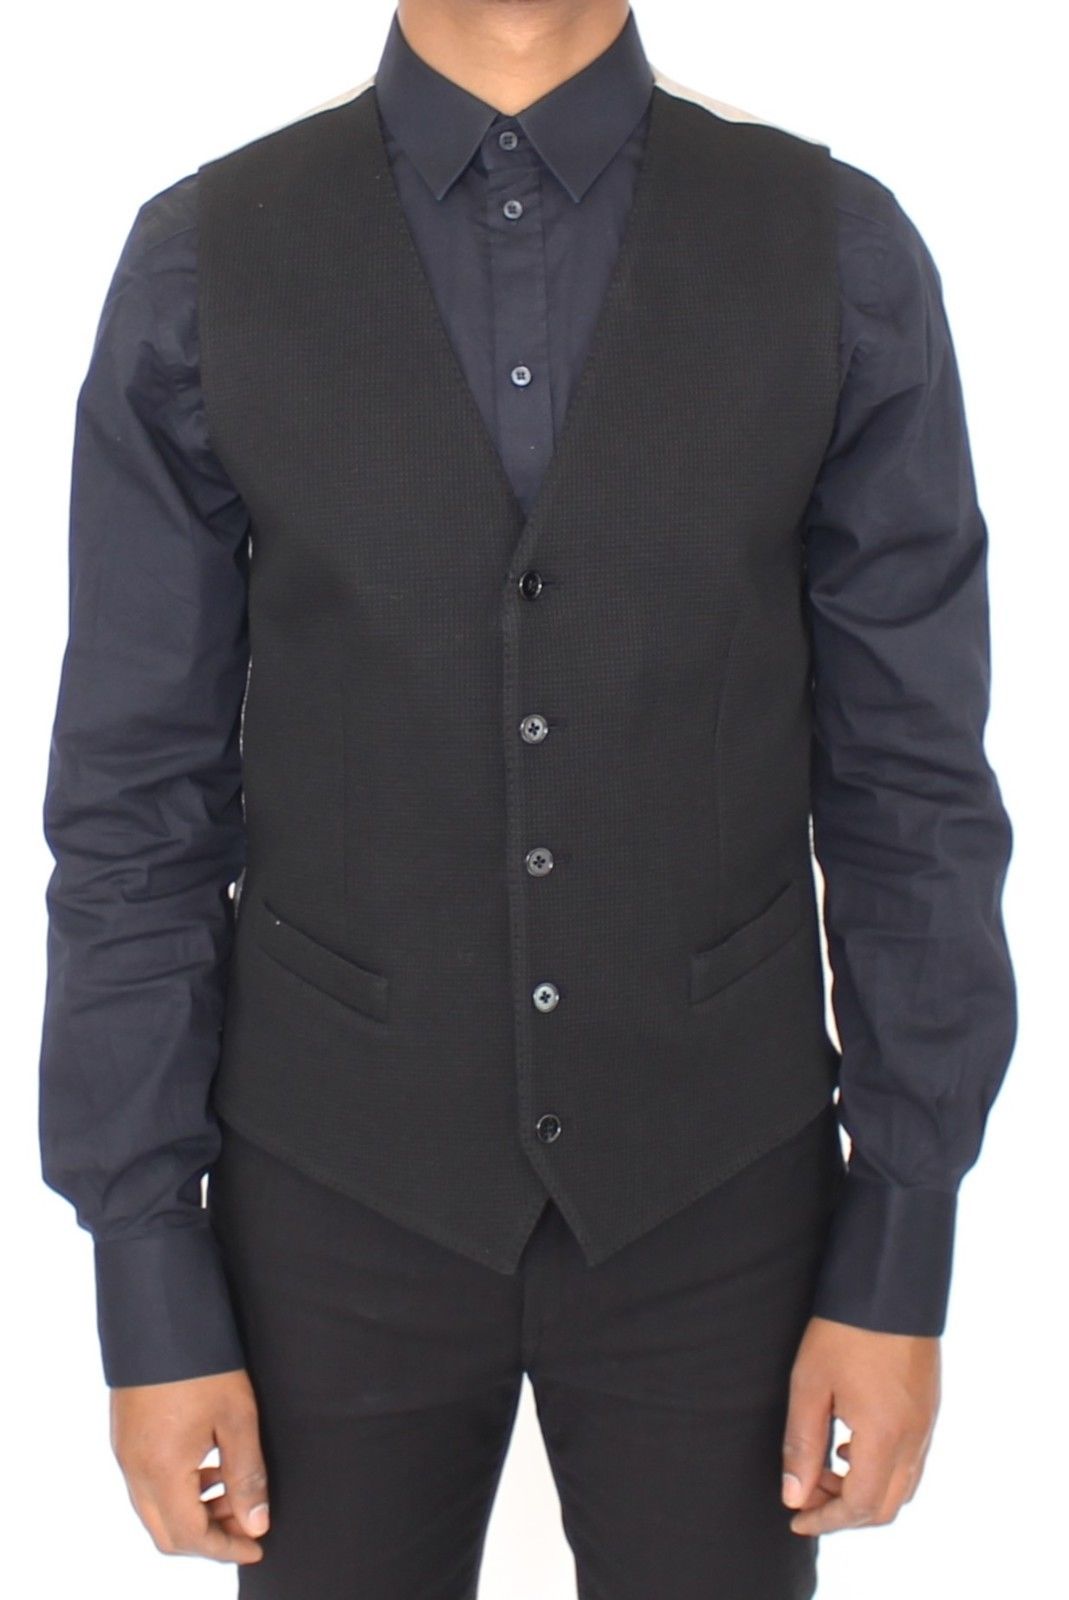 Black Cotton Dress Vest Blazer Jacket